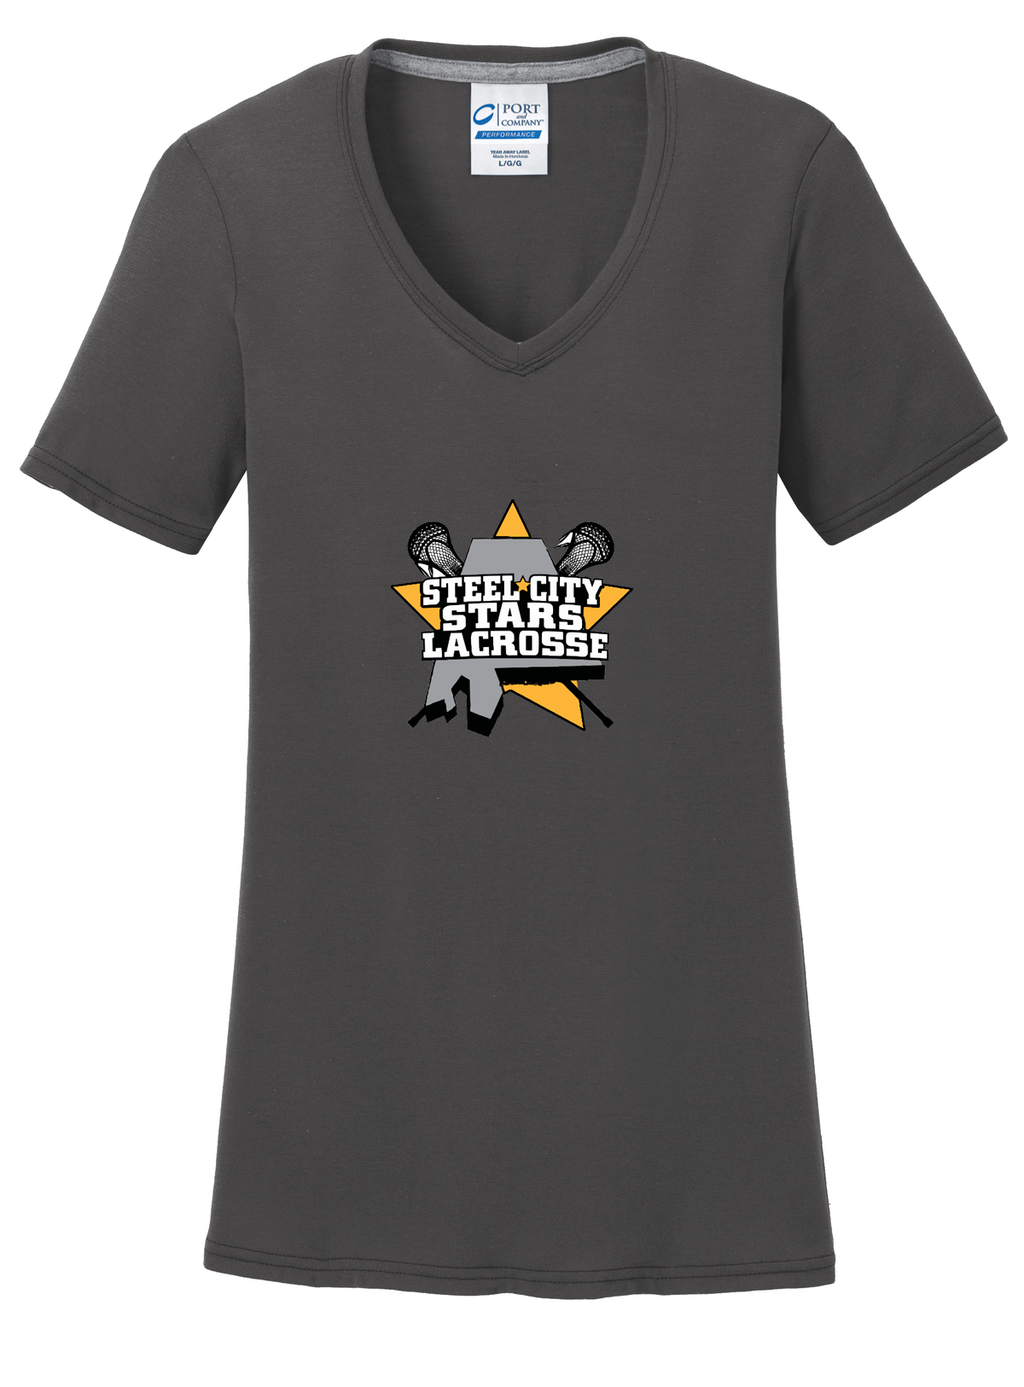 Stars Lacrosse Women's T-Shirt